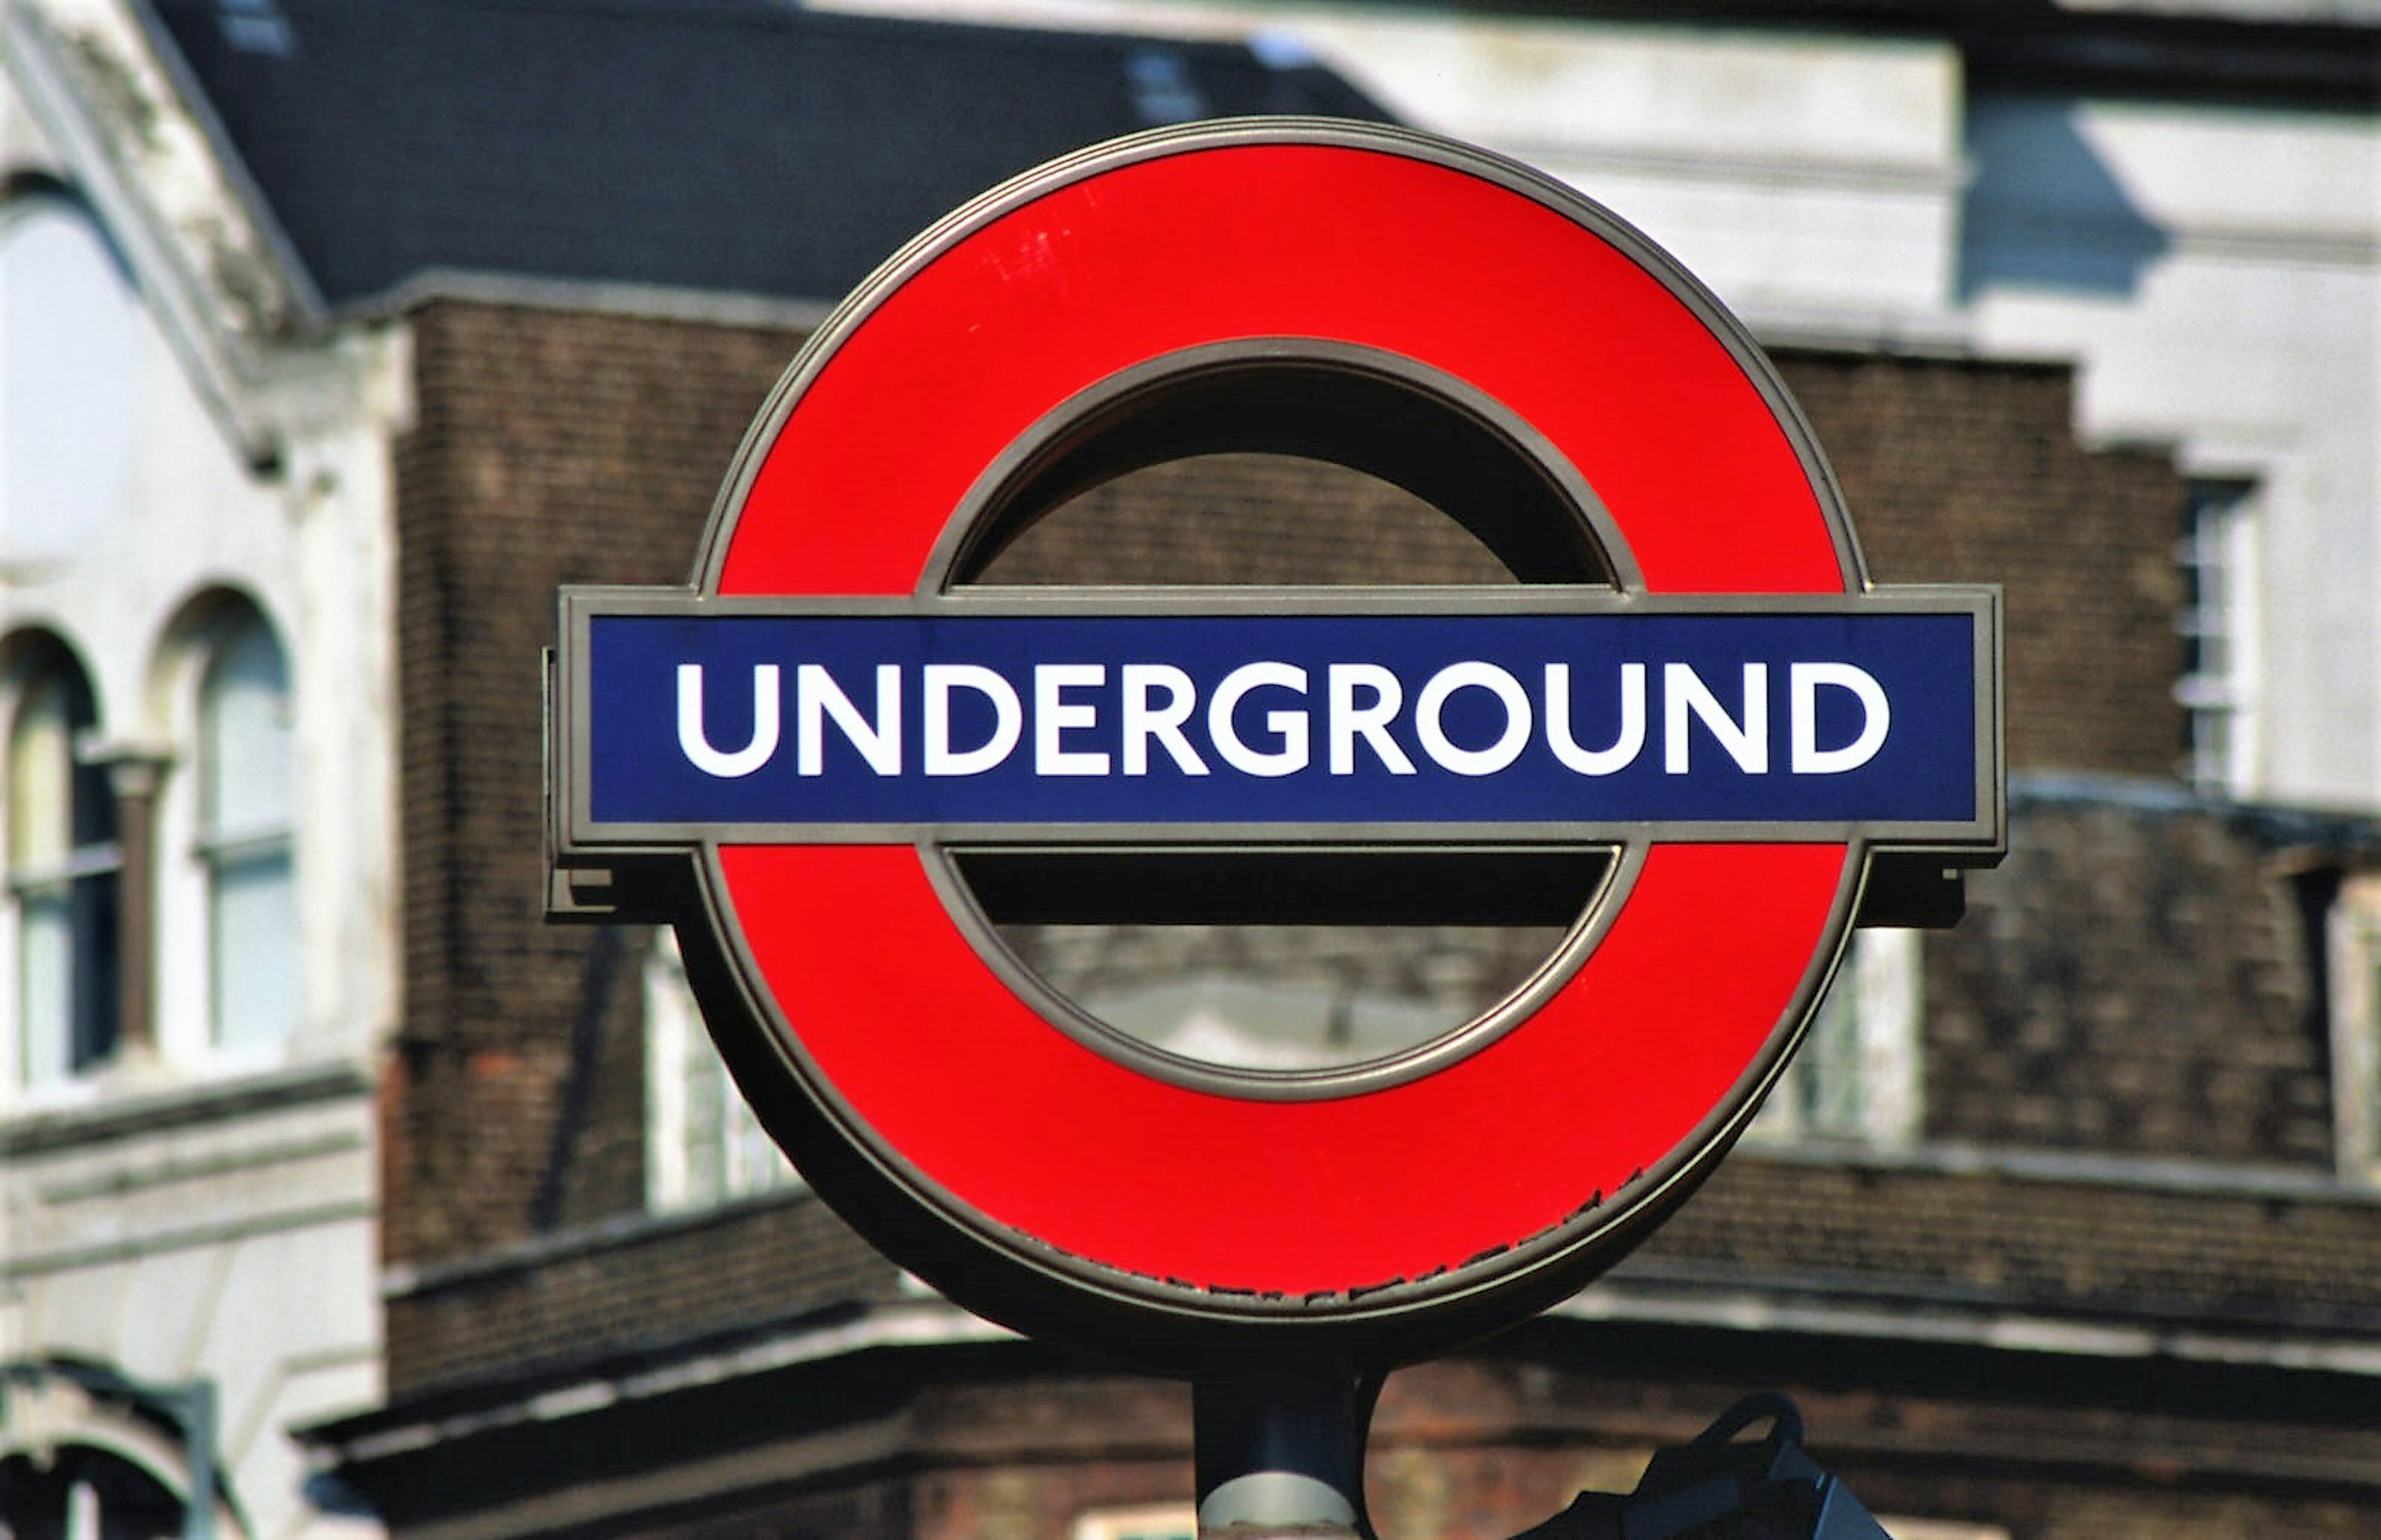 London Underground's famous sign